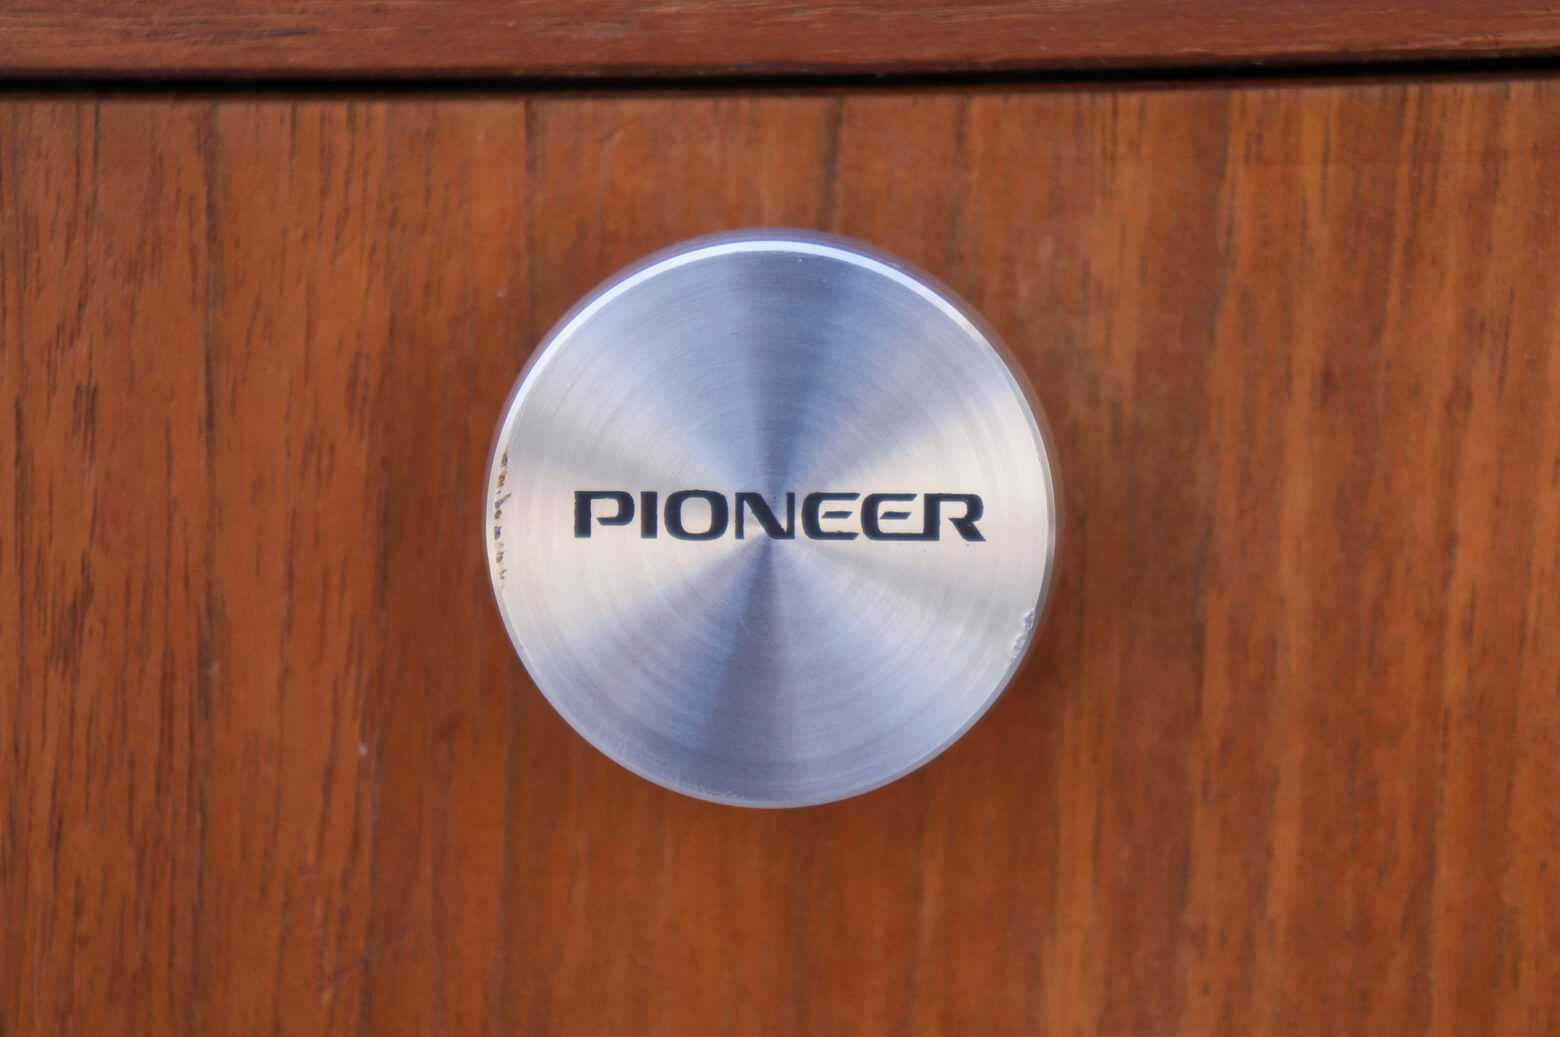 Pioneer Audio Rack/パイオニア オーディオラック ヴィンテージ チーク材 棚 レトロ